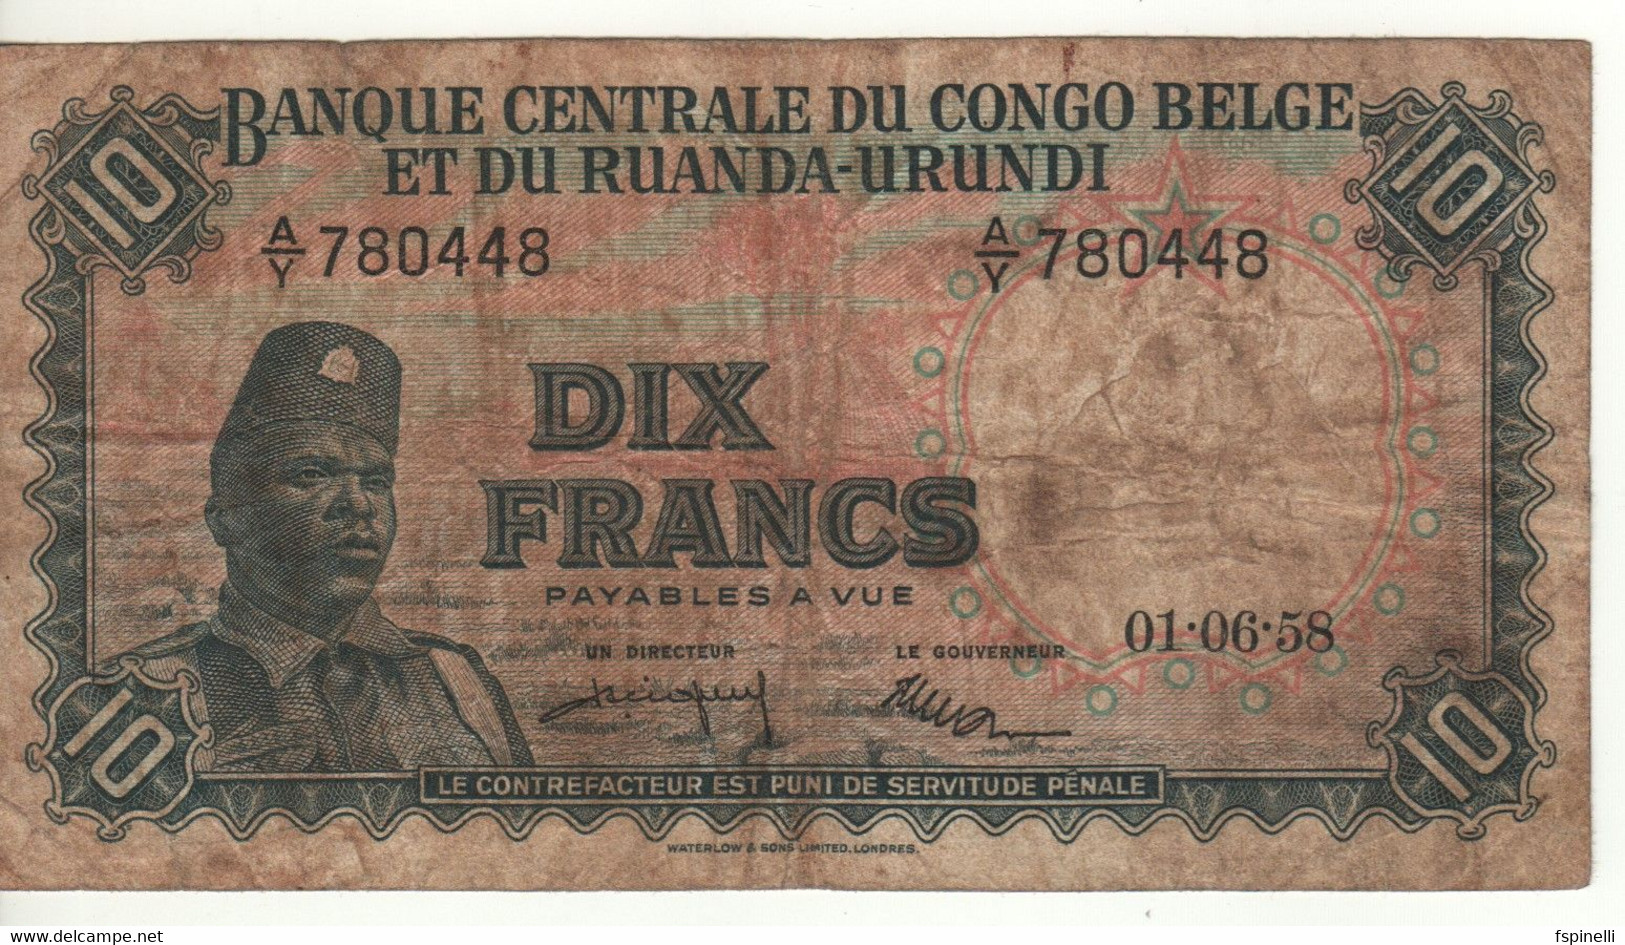 BELGIAN CONGO   10 Francs  P30b     Dated 01.06.58   ( Soldier Of The "Force Publique" - Antelope ) - Belgian Congo Bank